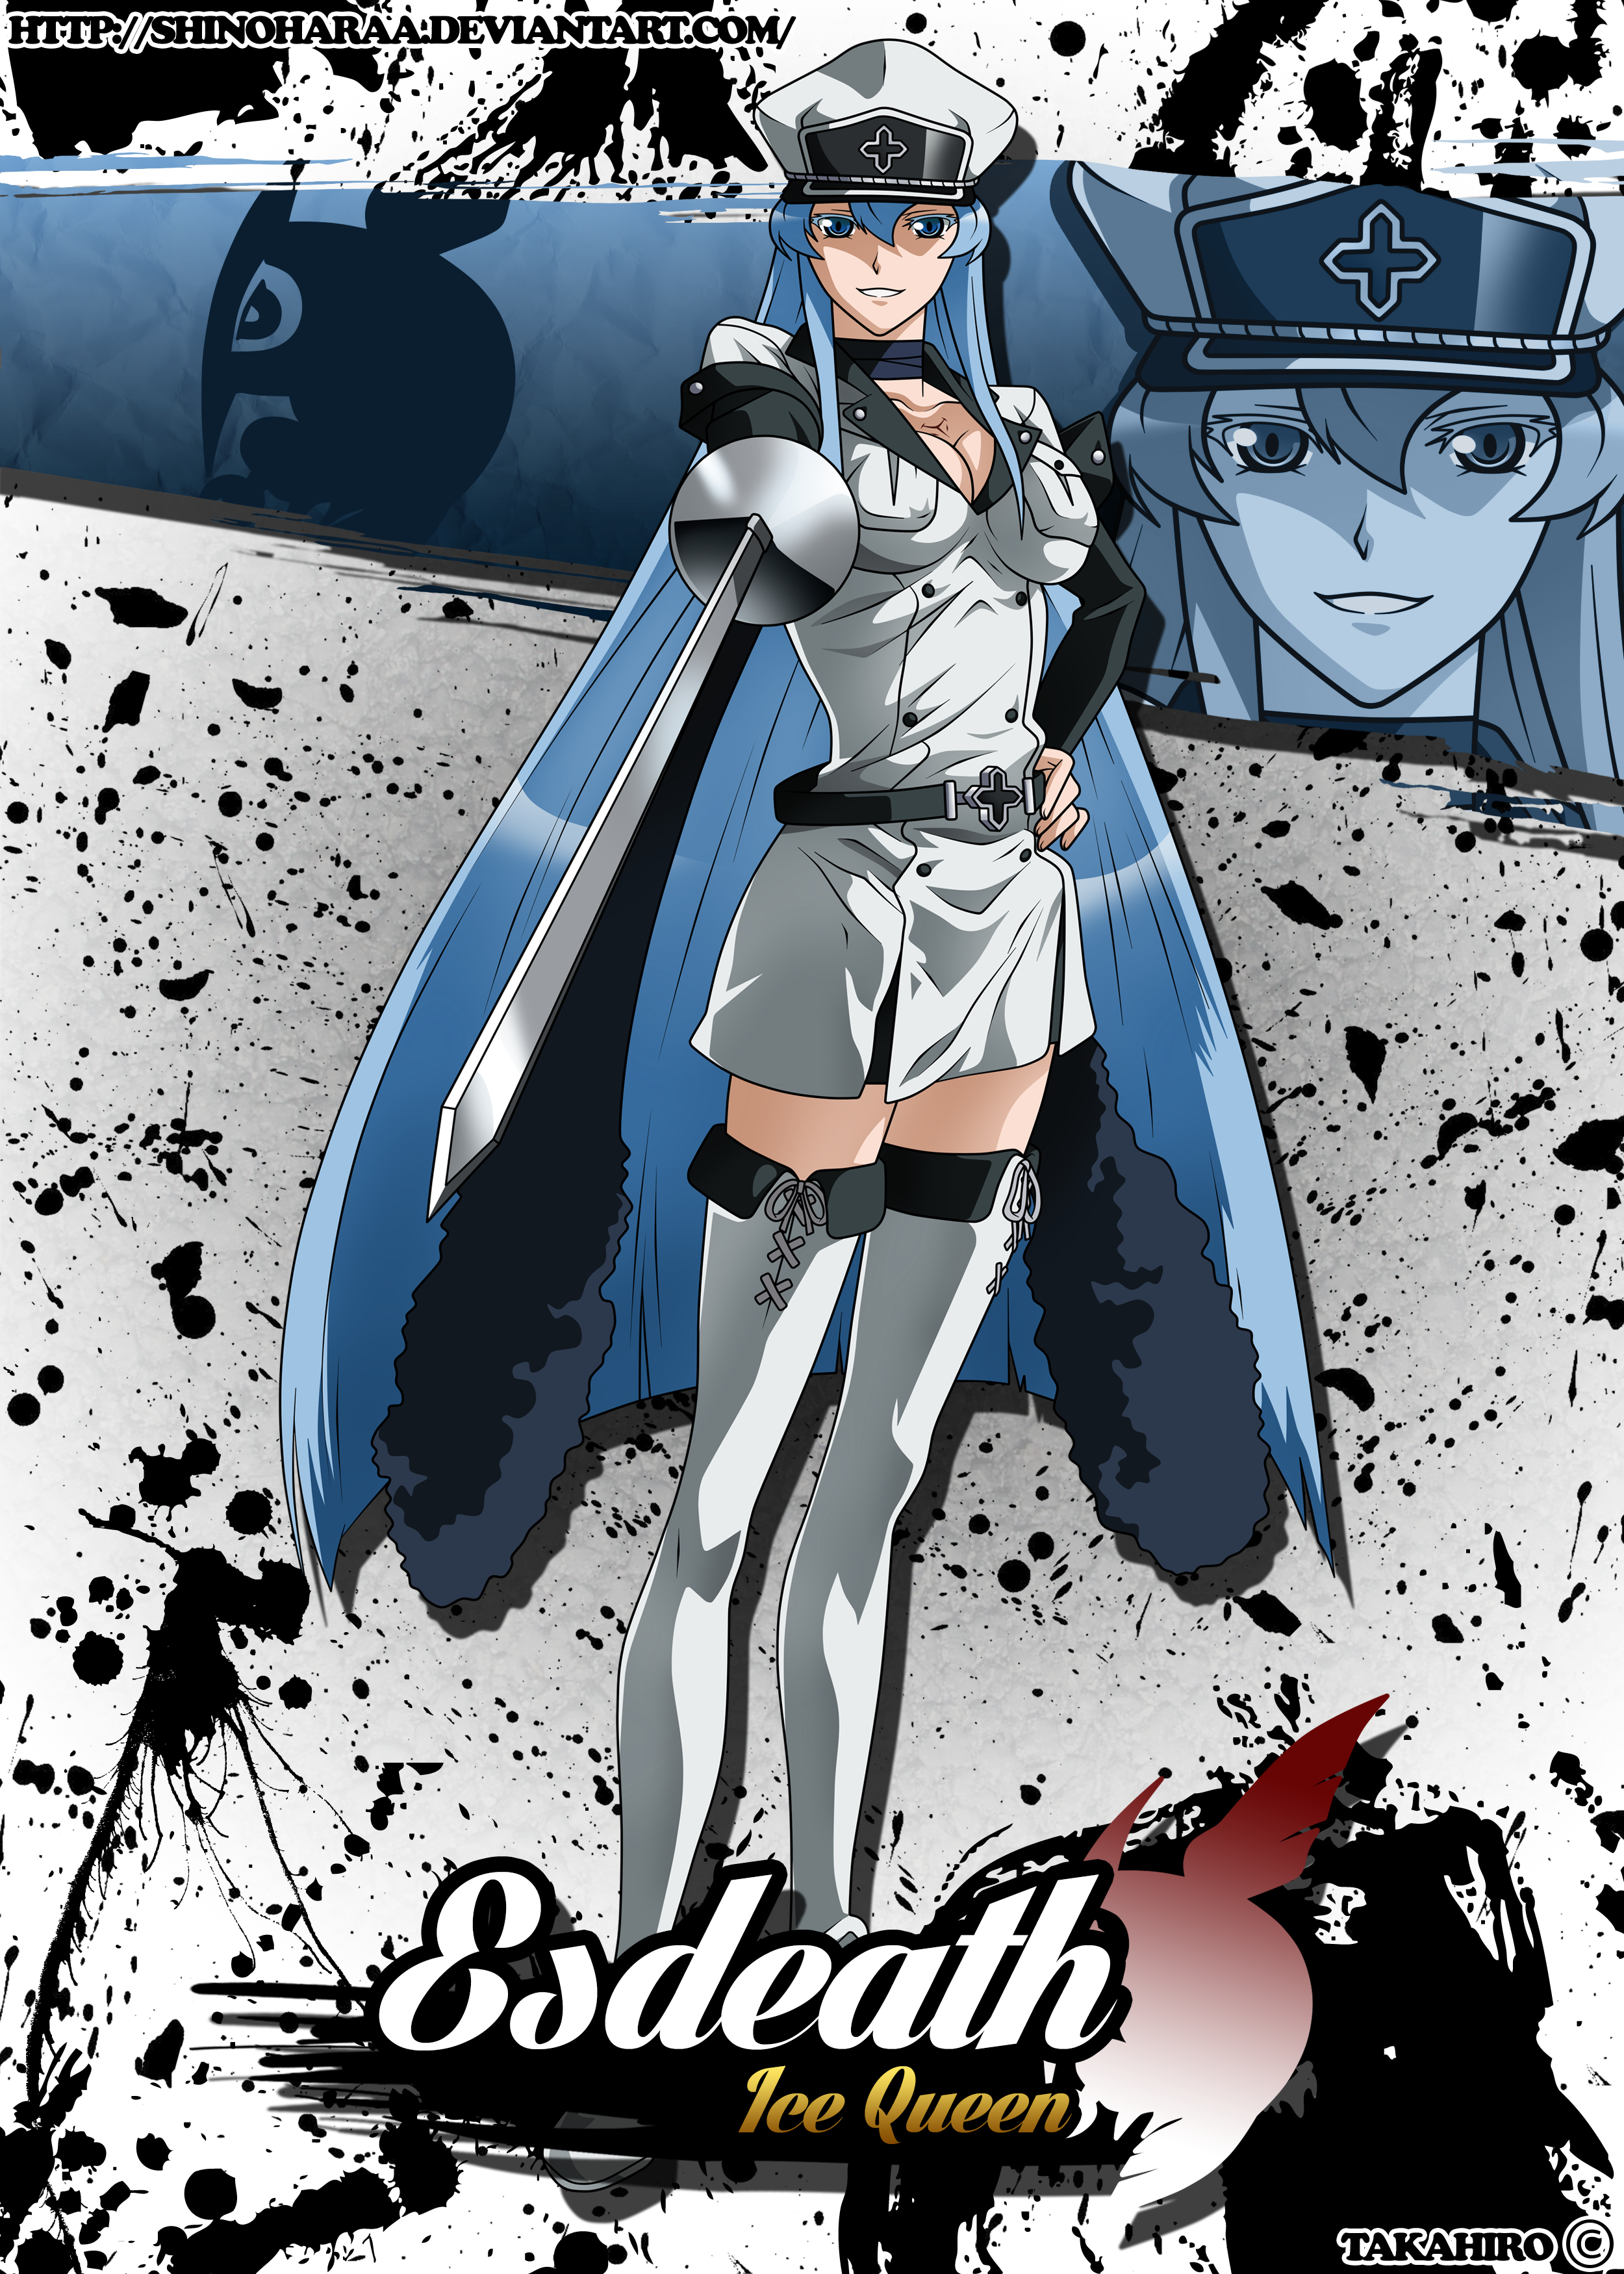 Anime 2500x3500 Esdeath (Akame Ga Kill!) Akame ga Kill! anime anime girls hat blue hair boobs big boobs cleavage women with swords weapon uniform standing long hair women with hats blue eyes